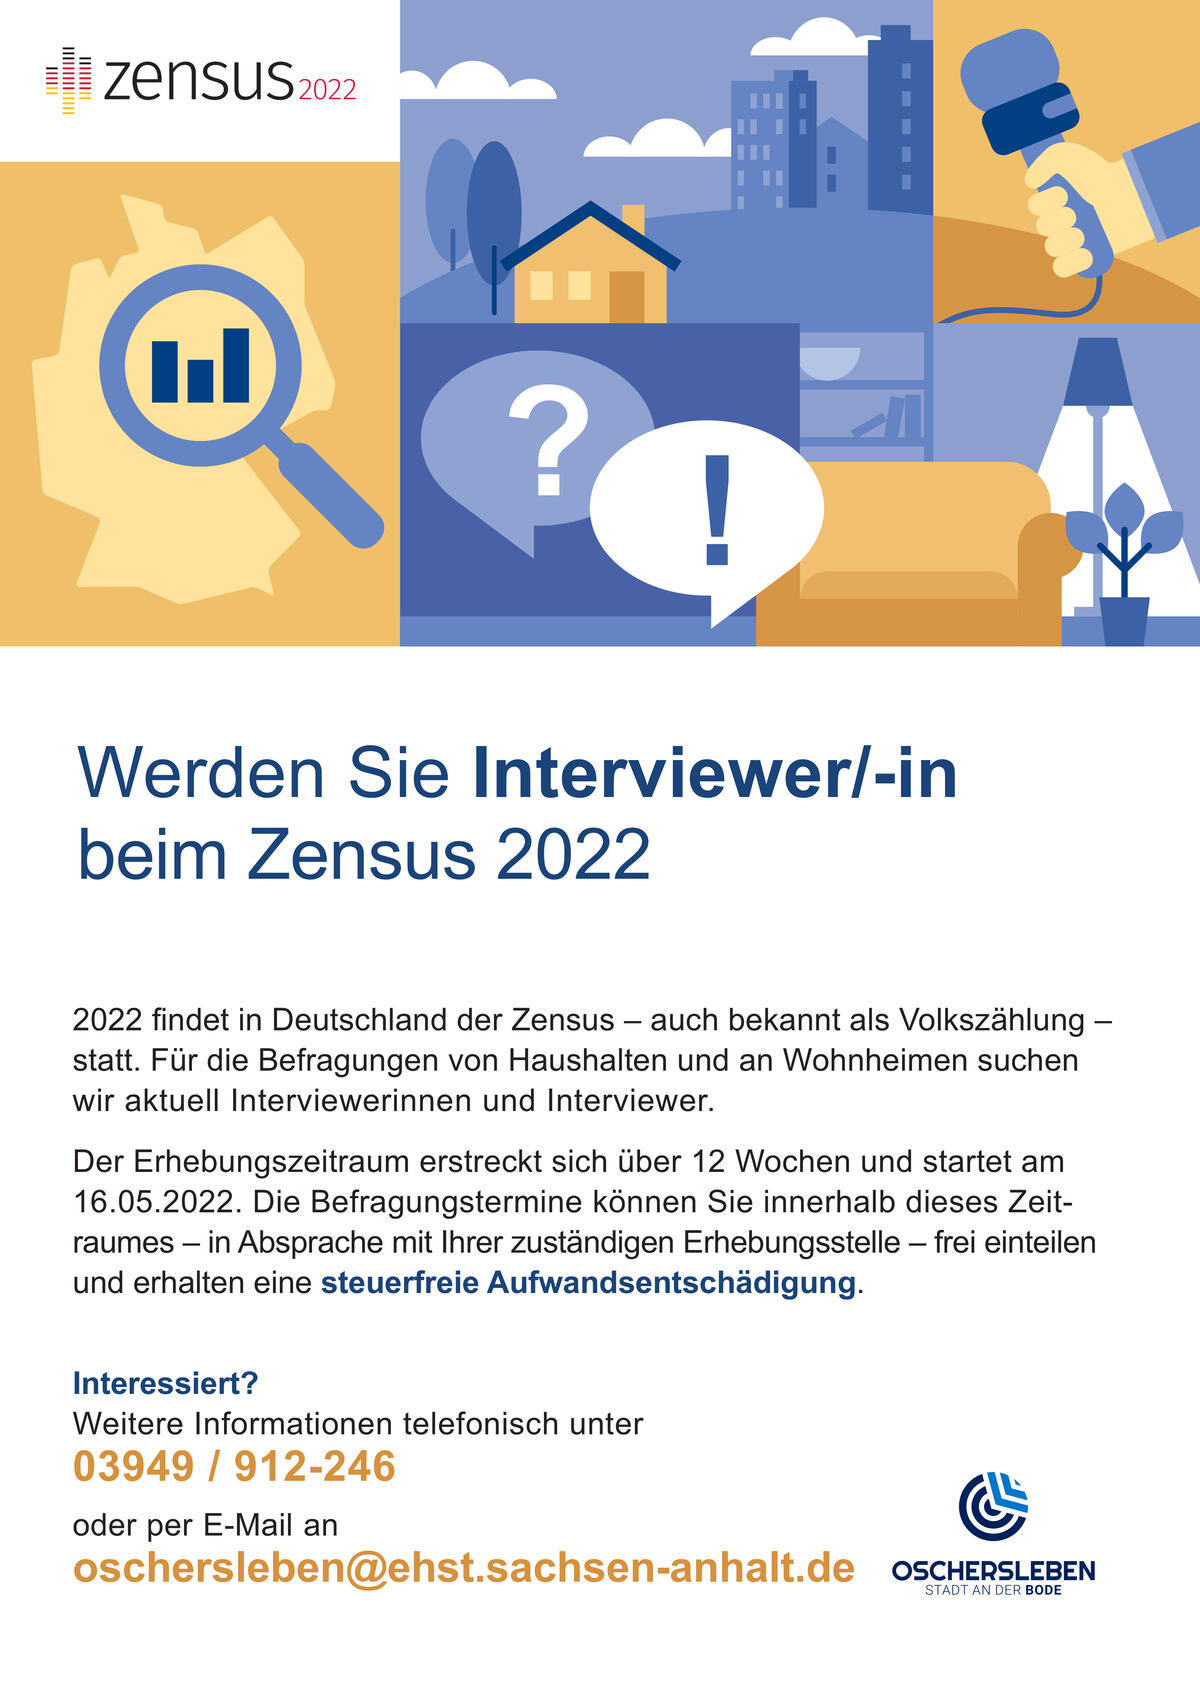 Zensus 2022 - Interviewer/-in